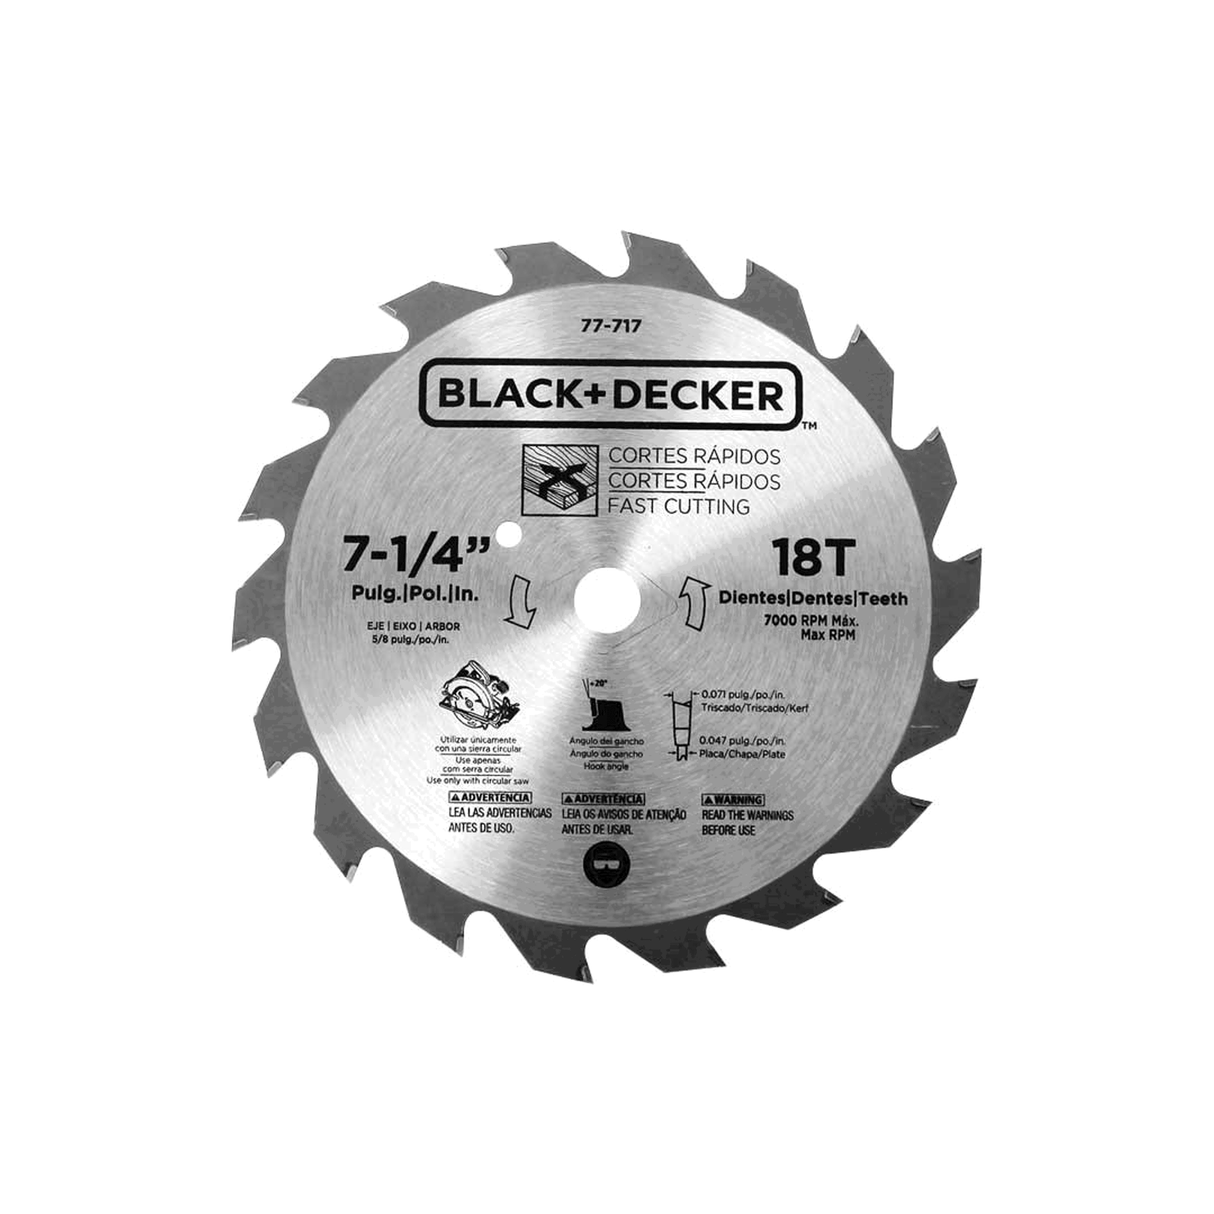 Sierra Circular Black & Decker CS1024-B3 7-1/4" 1500 W